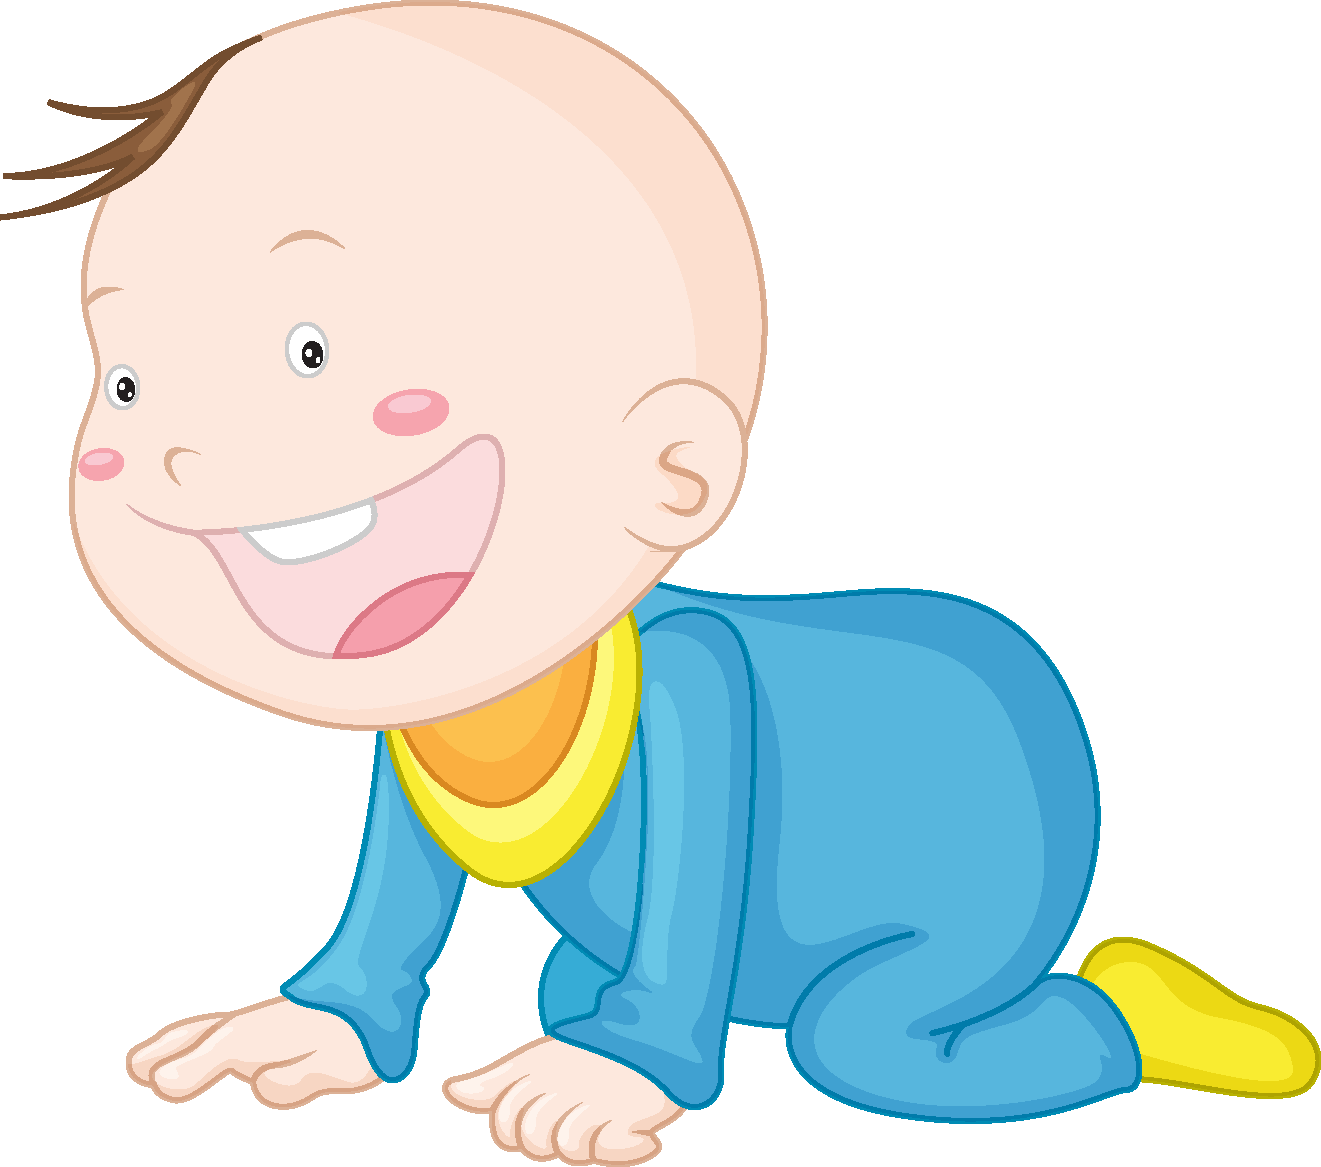 Cartoon Baby, Children, Kids 08 - SVG, PNG, AI, EPS Vectors SVG, PNG, AI,  EPS Vectors